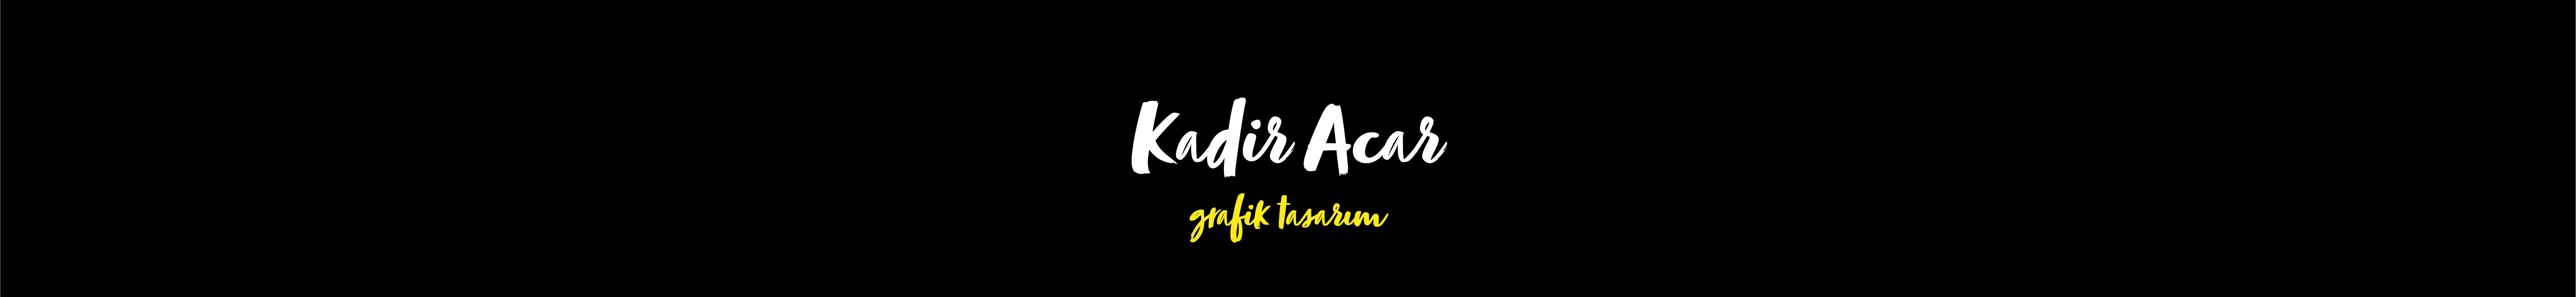 Banner de perfil de Kadir Acar